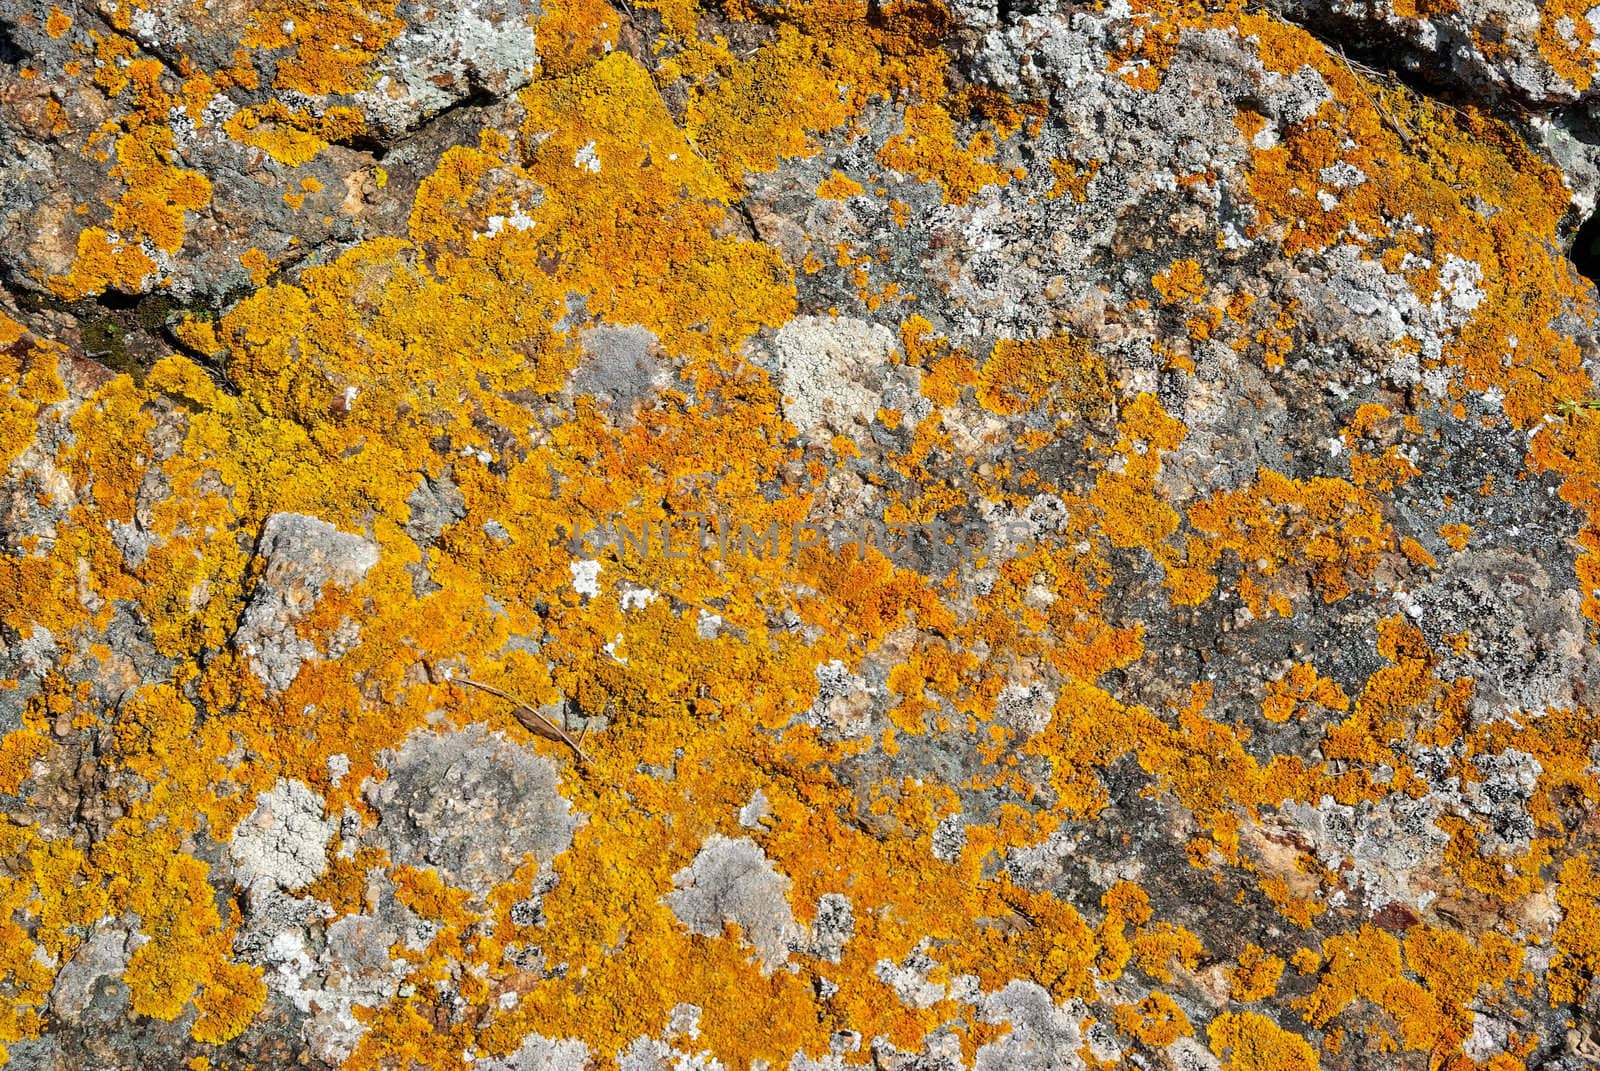 Rock with orange lichen over it as textured background.